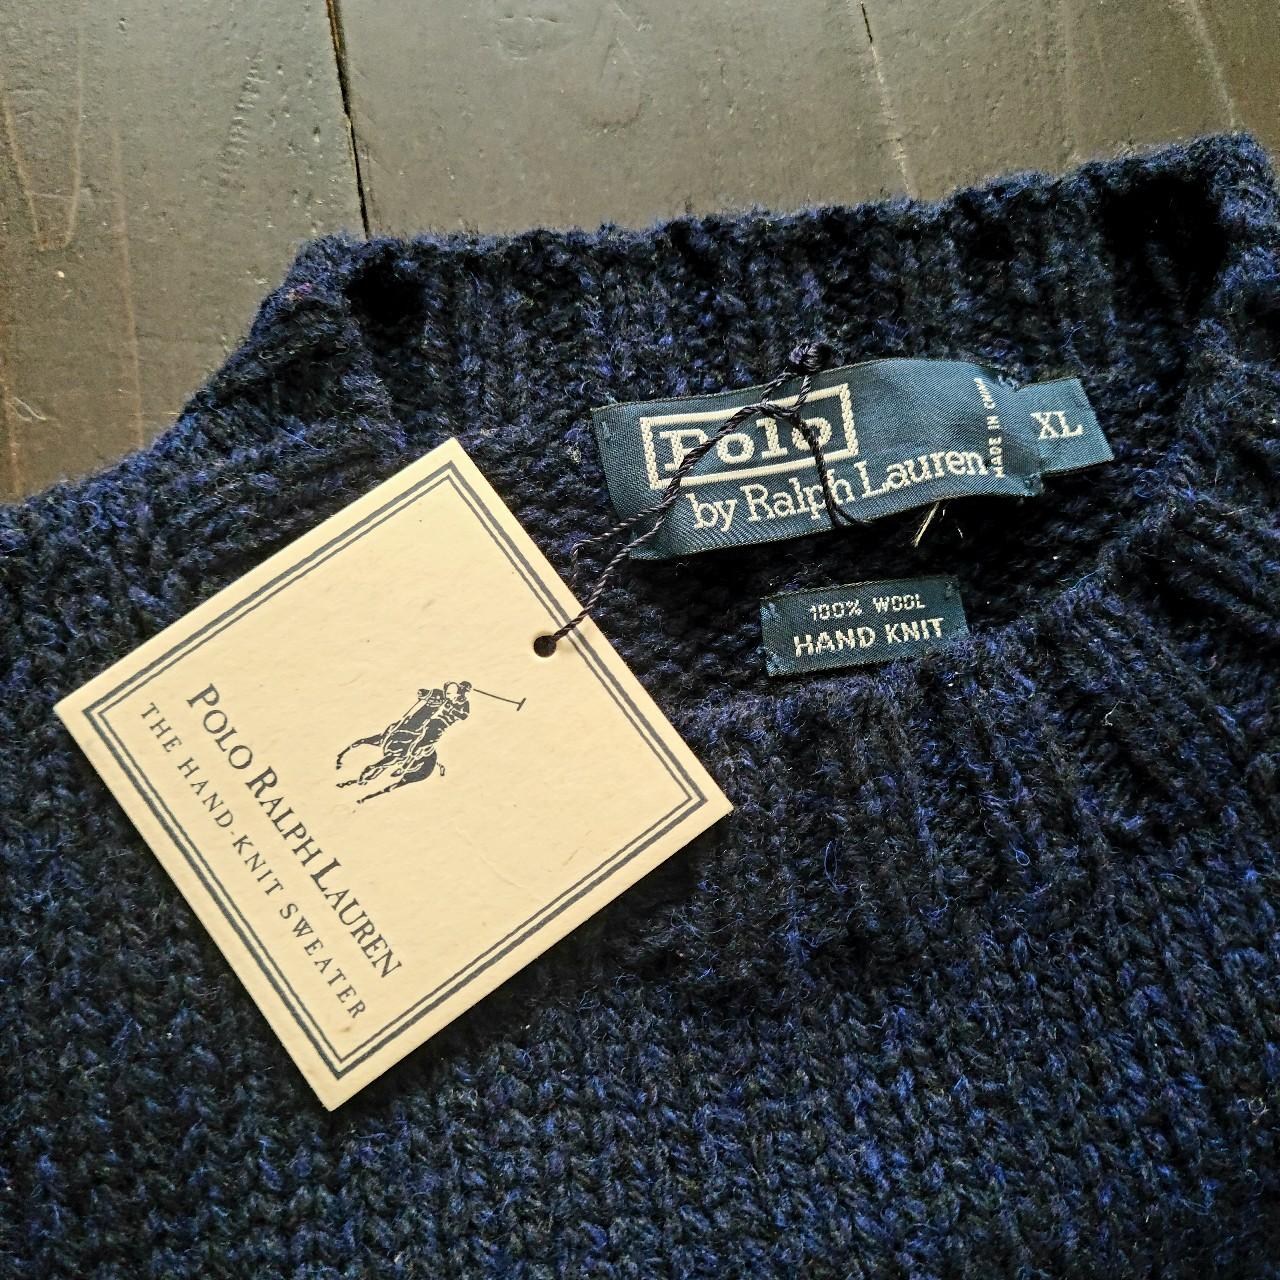 Polo Ralph Lauren OG Star Knit Sweater, Open to...